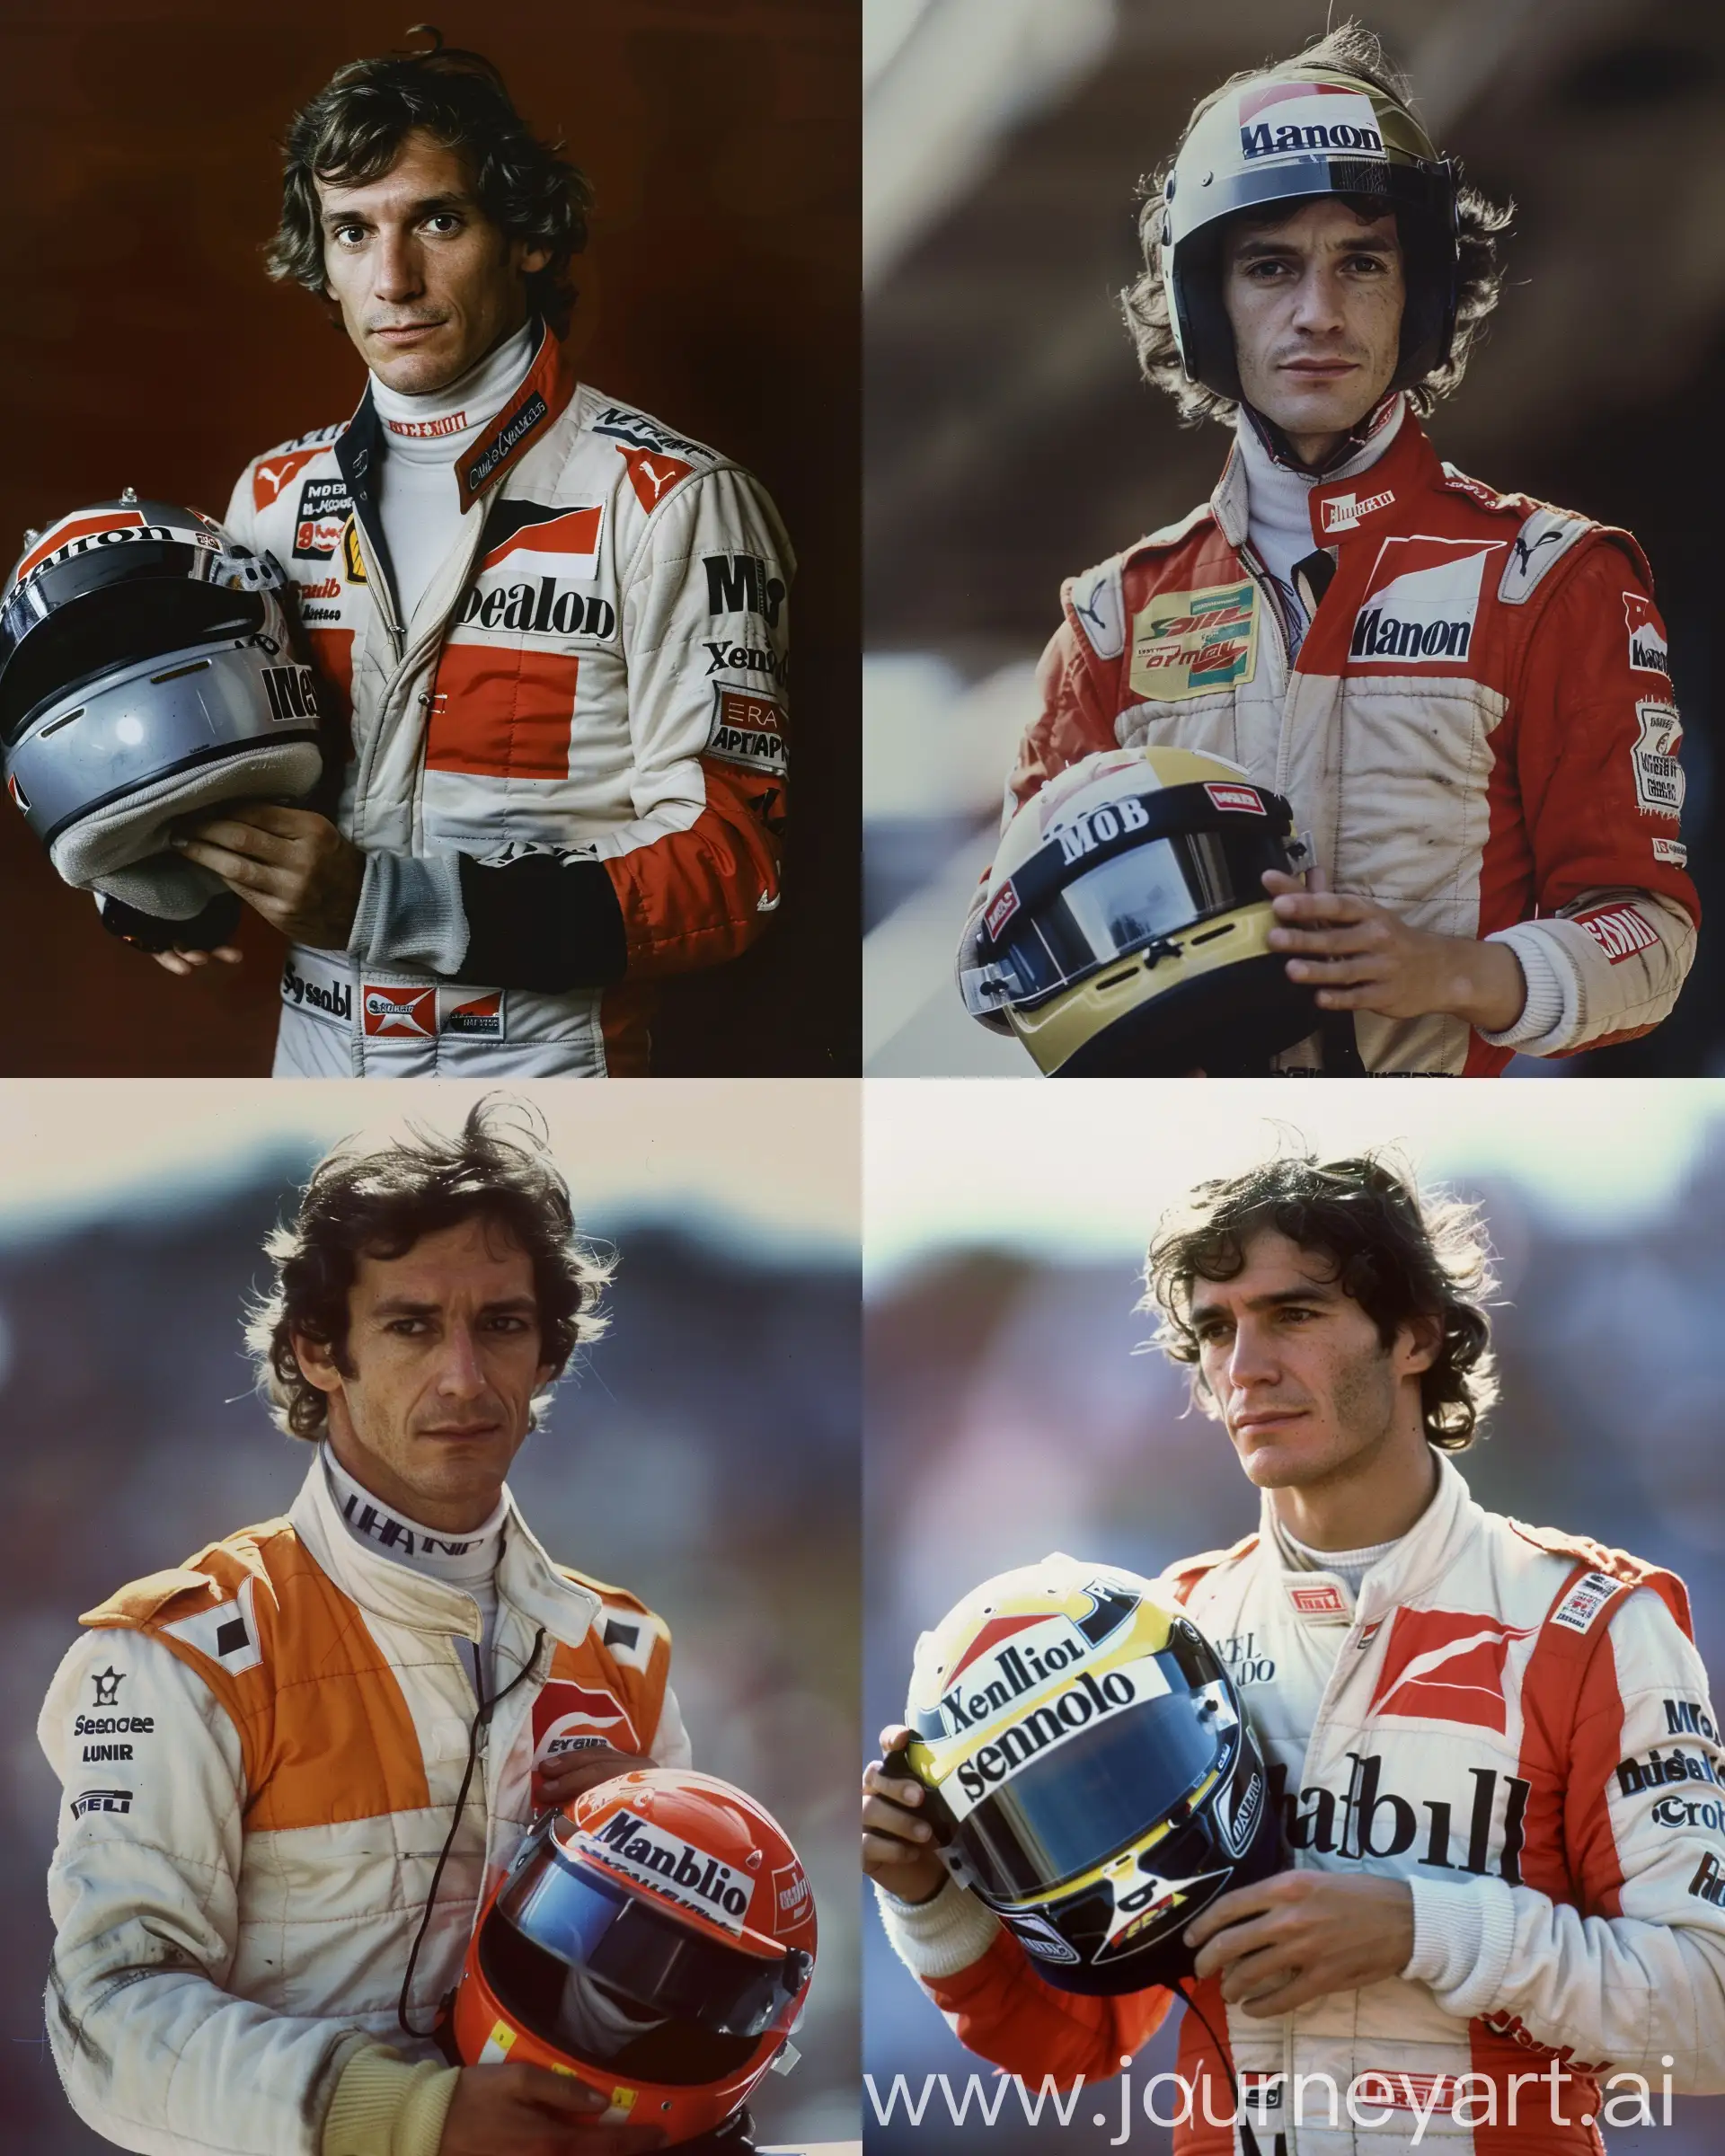 Ayrton-Senna-Iconic-Formula-1-Champion-Gazing-into-the-Distance-with-Racing-Gear